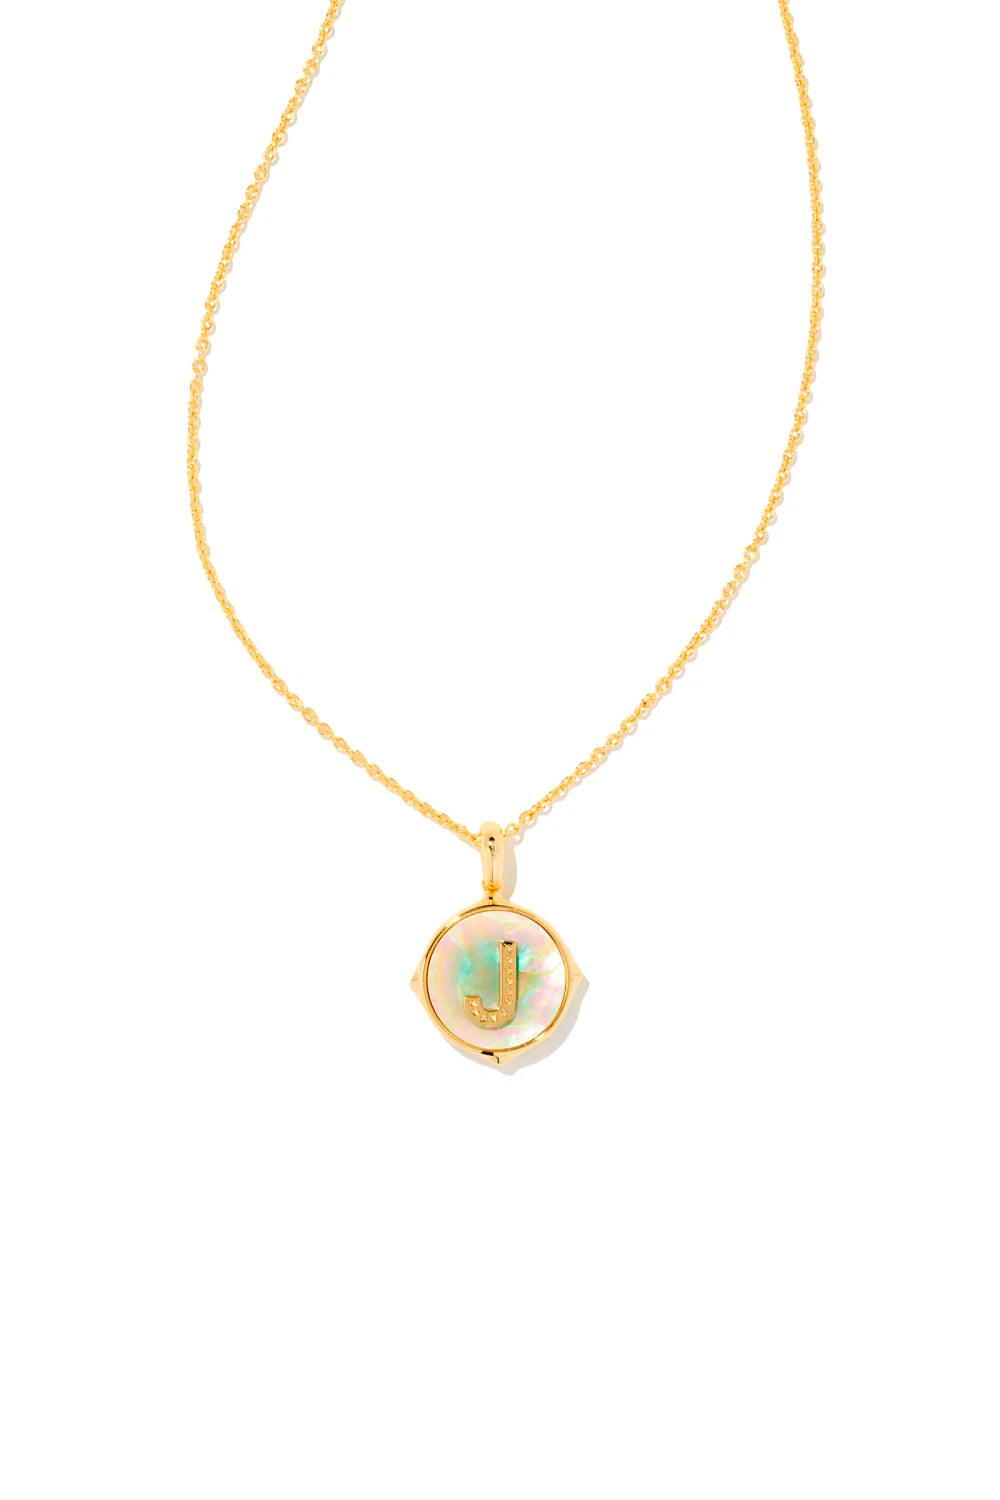 Kendra Scott: Letter J Gold Disk Pendant Necklace - Iridescent Abalone | Makk Fashions